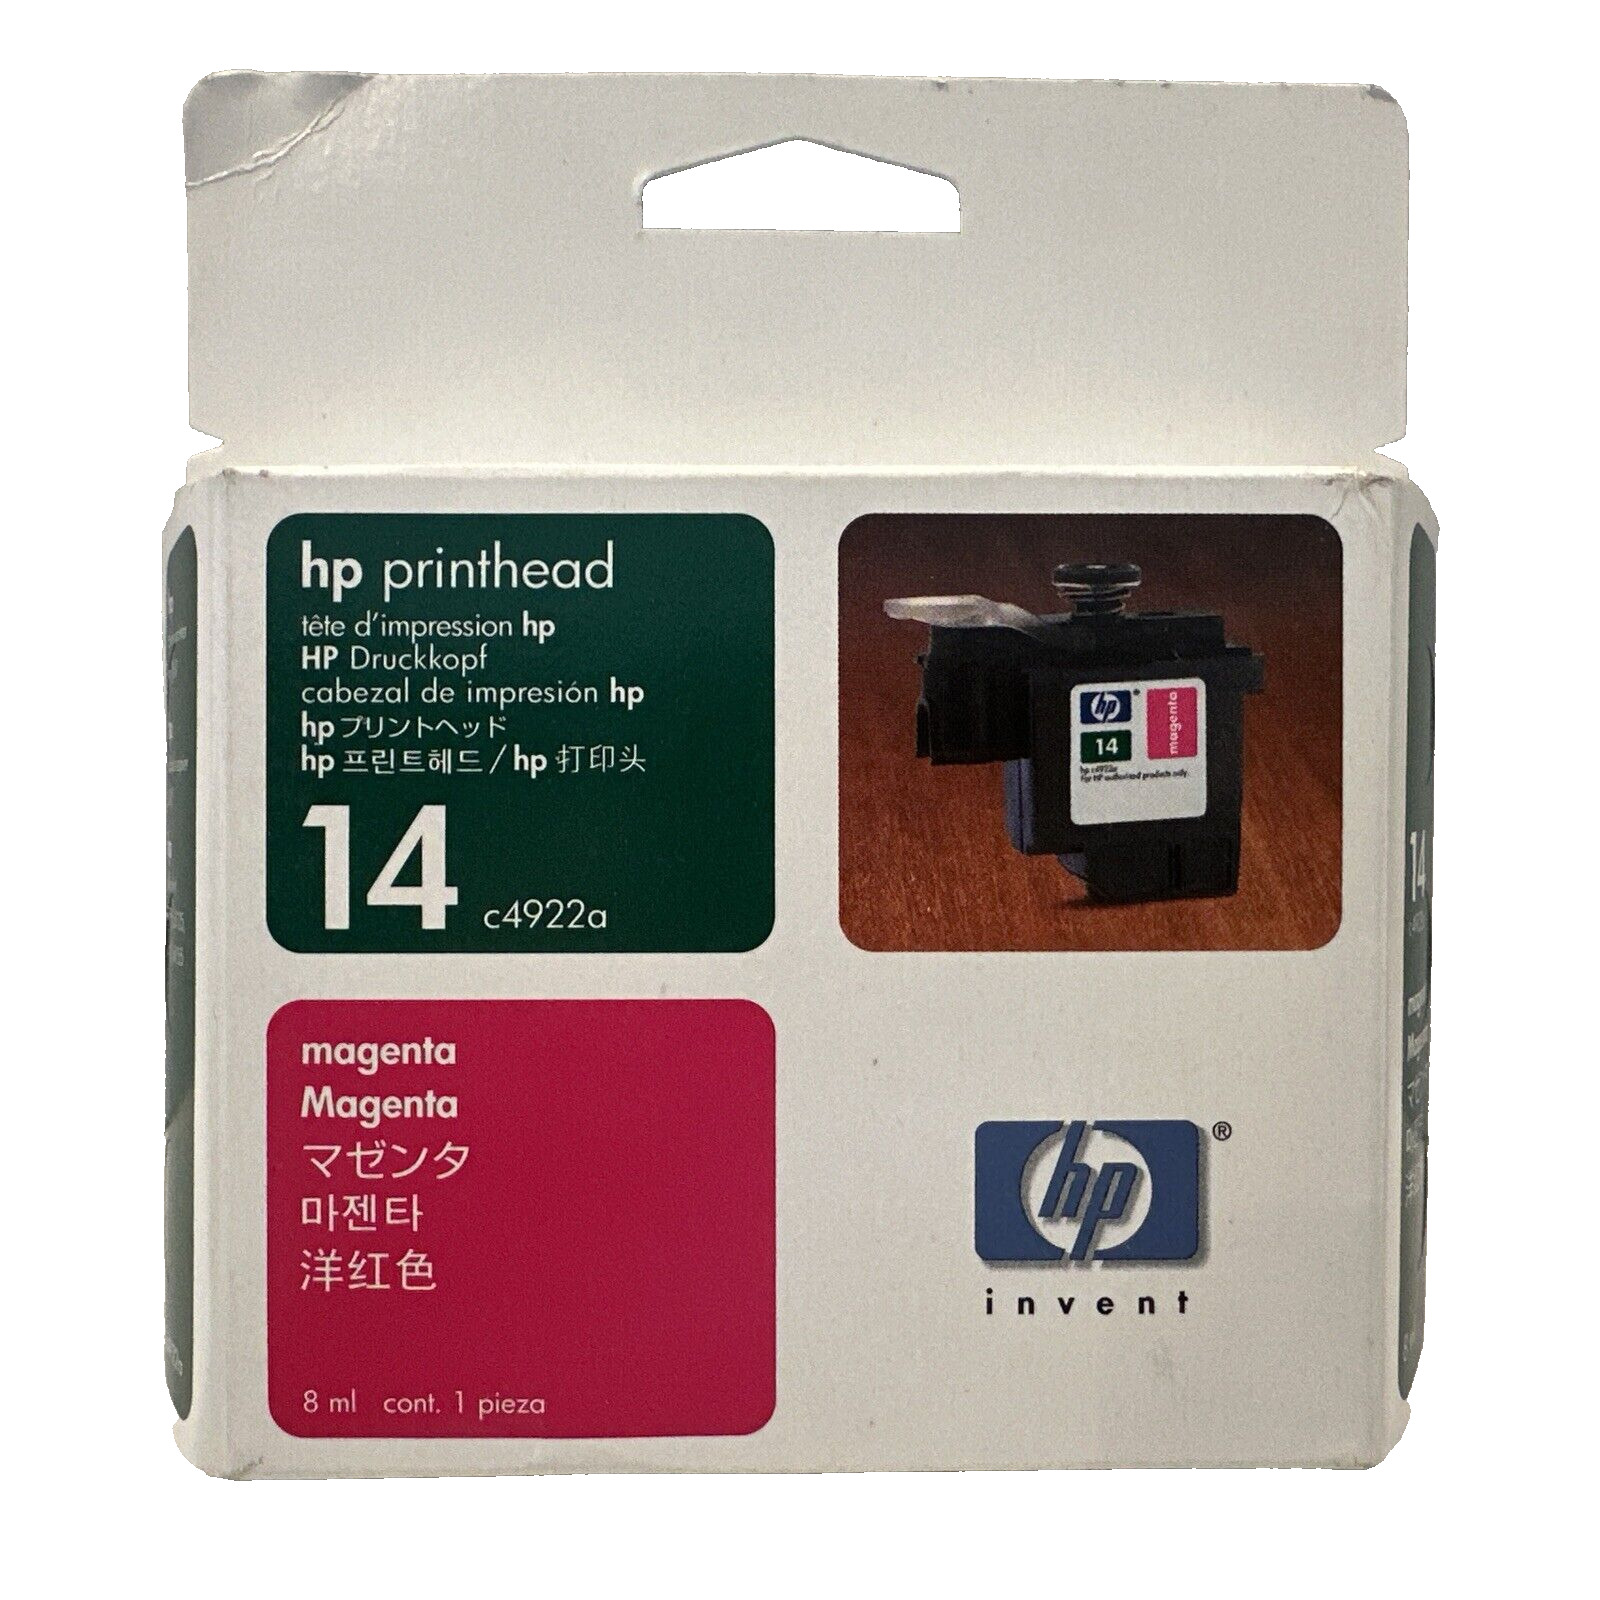 Genuine HP 14 Magenta Ink Cartridge C4922A New Sealed in Box - Expires 12/2006